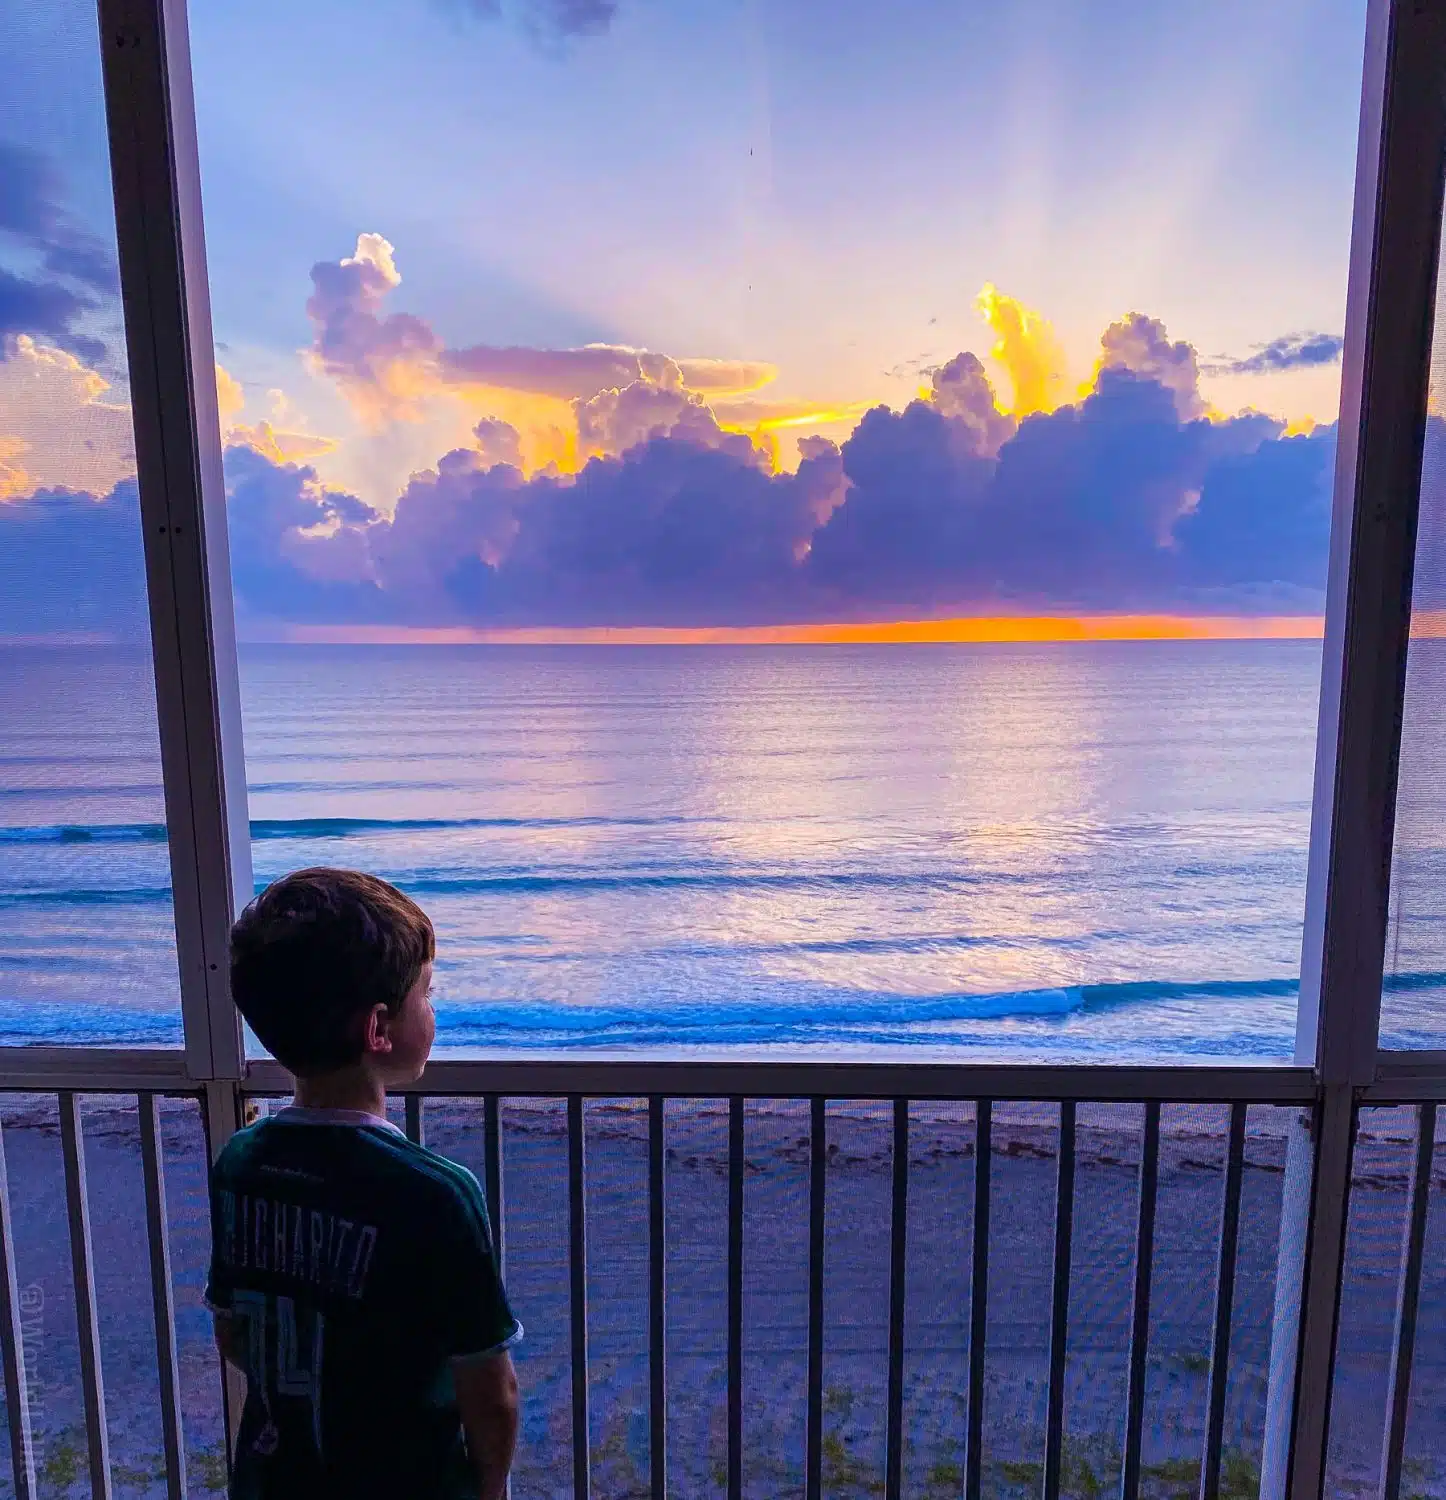 Watching a Florida sunset.